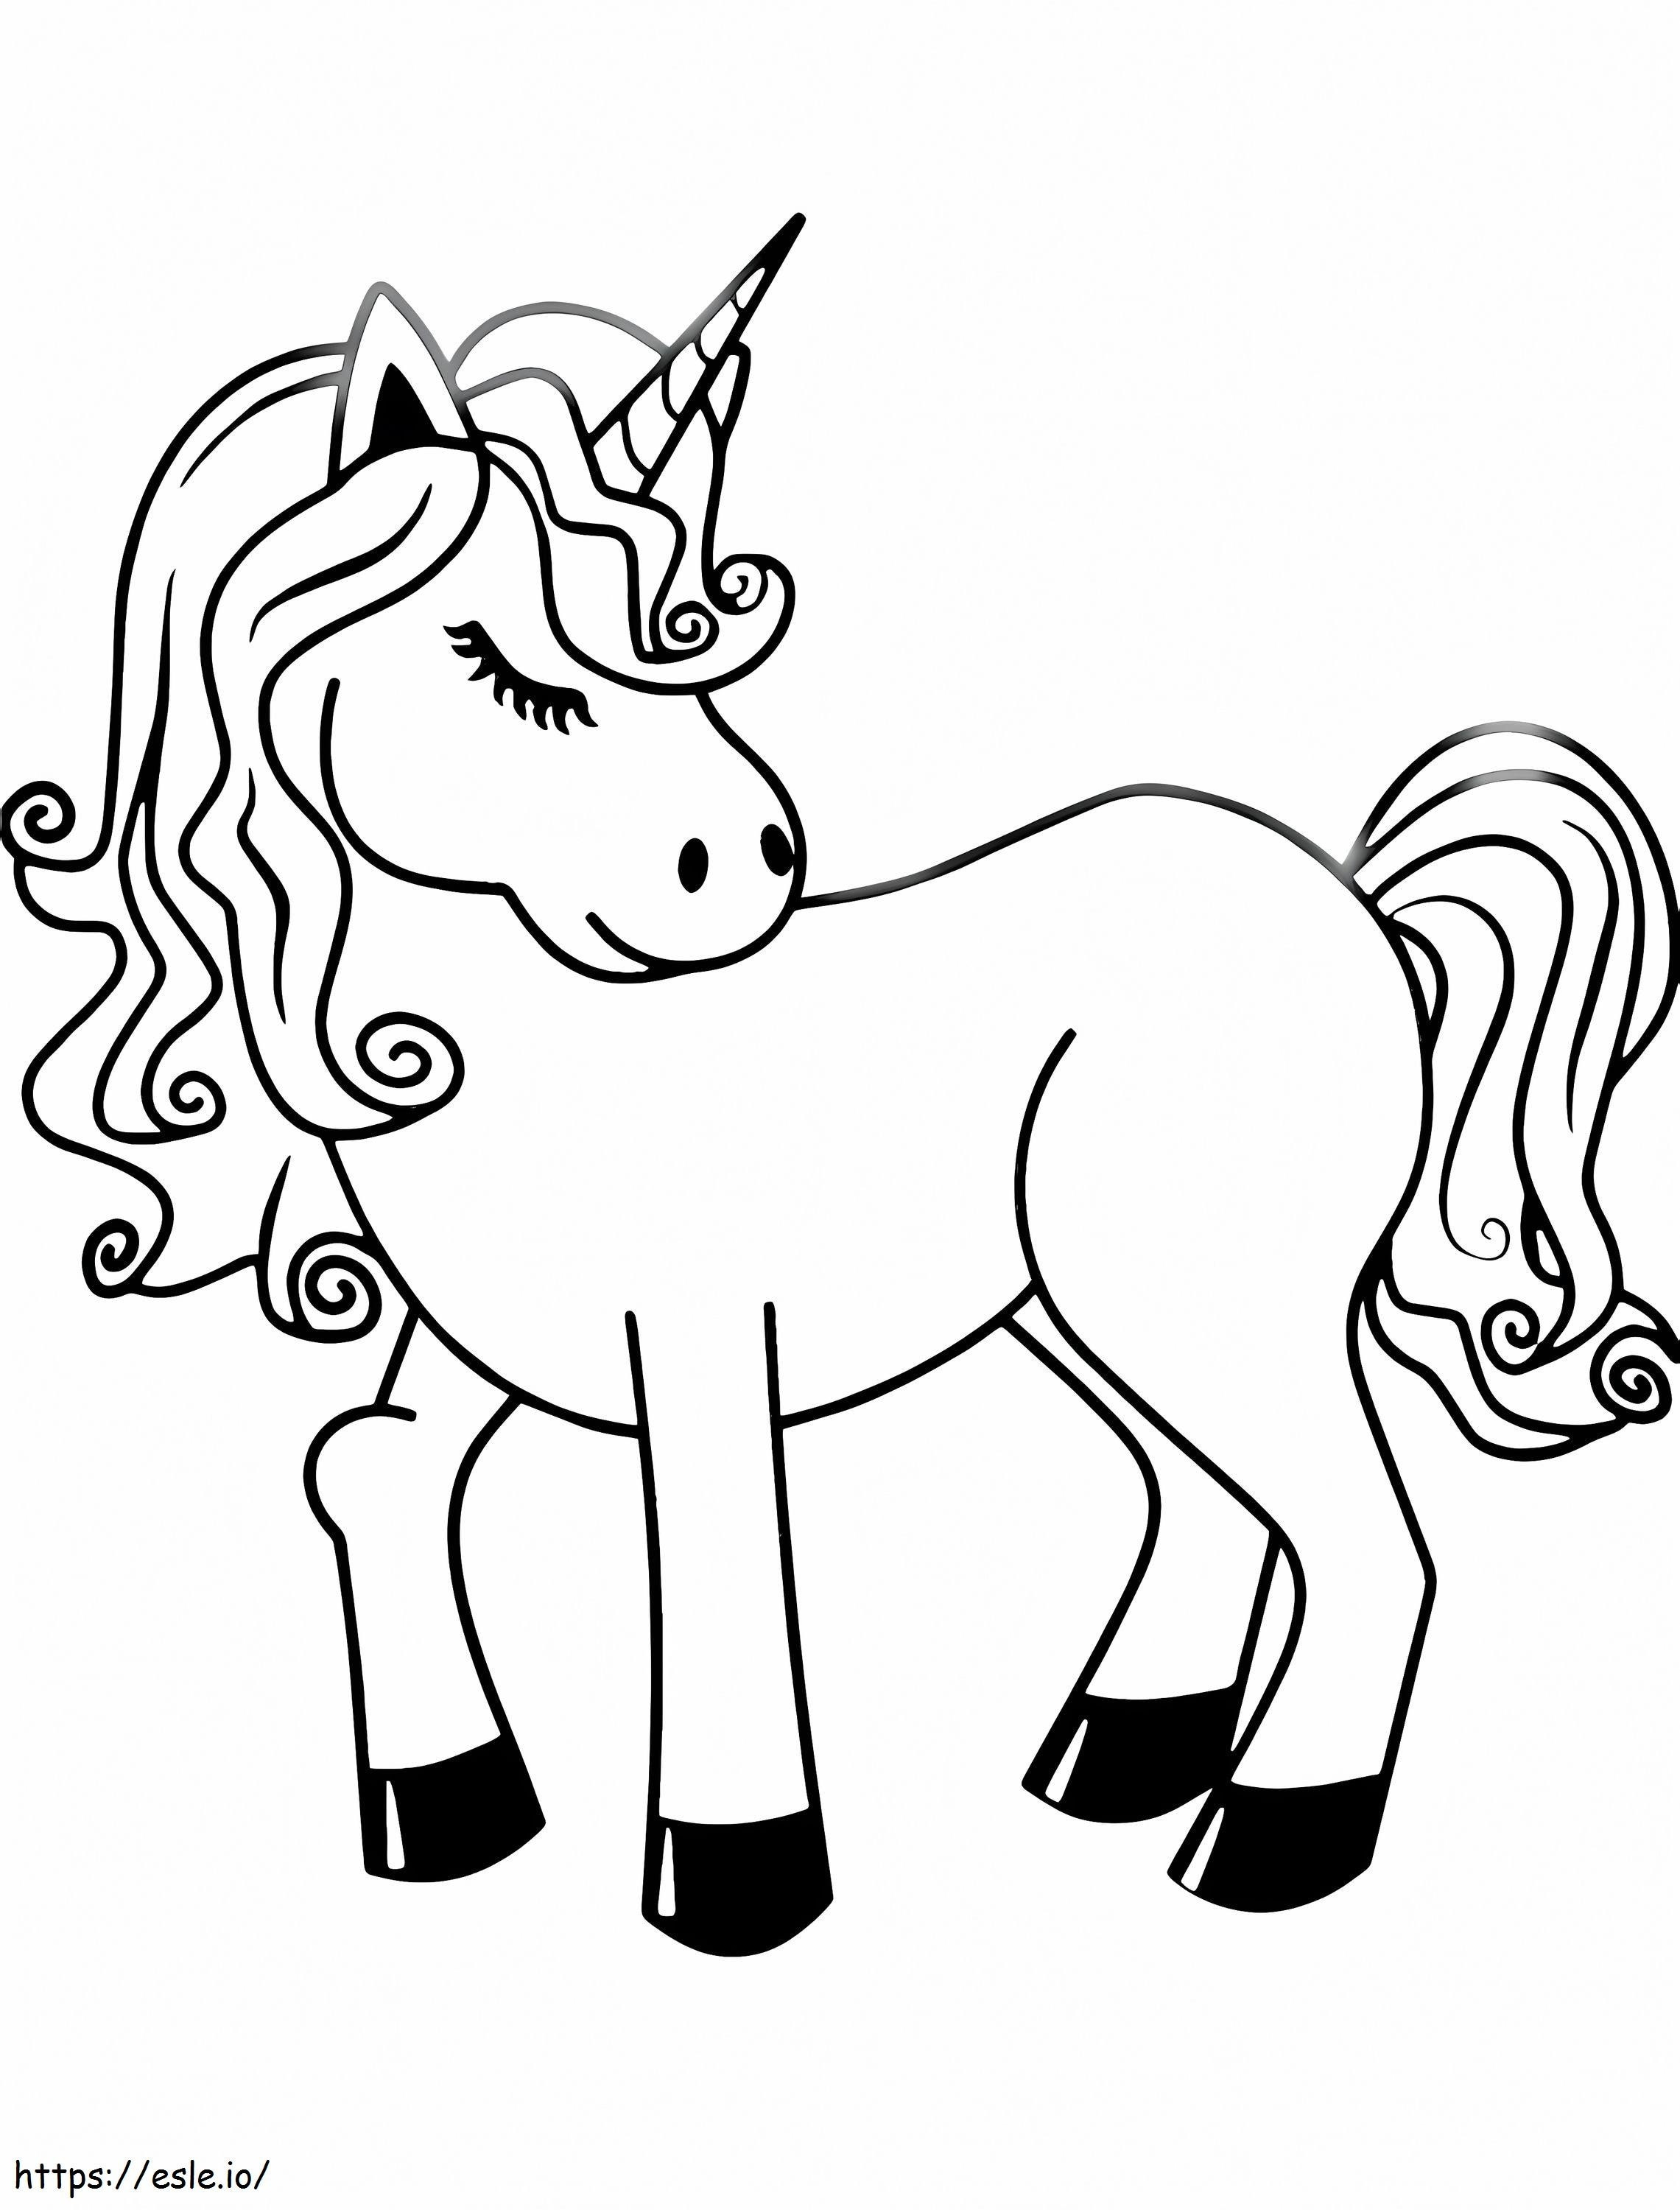 Cute Unicorn 3 coloring page